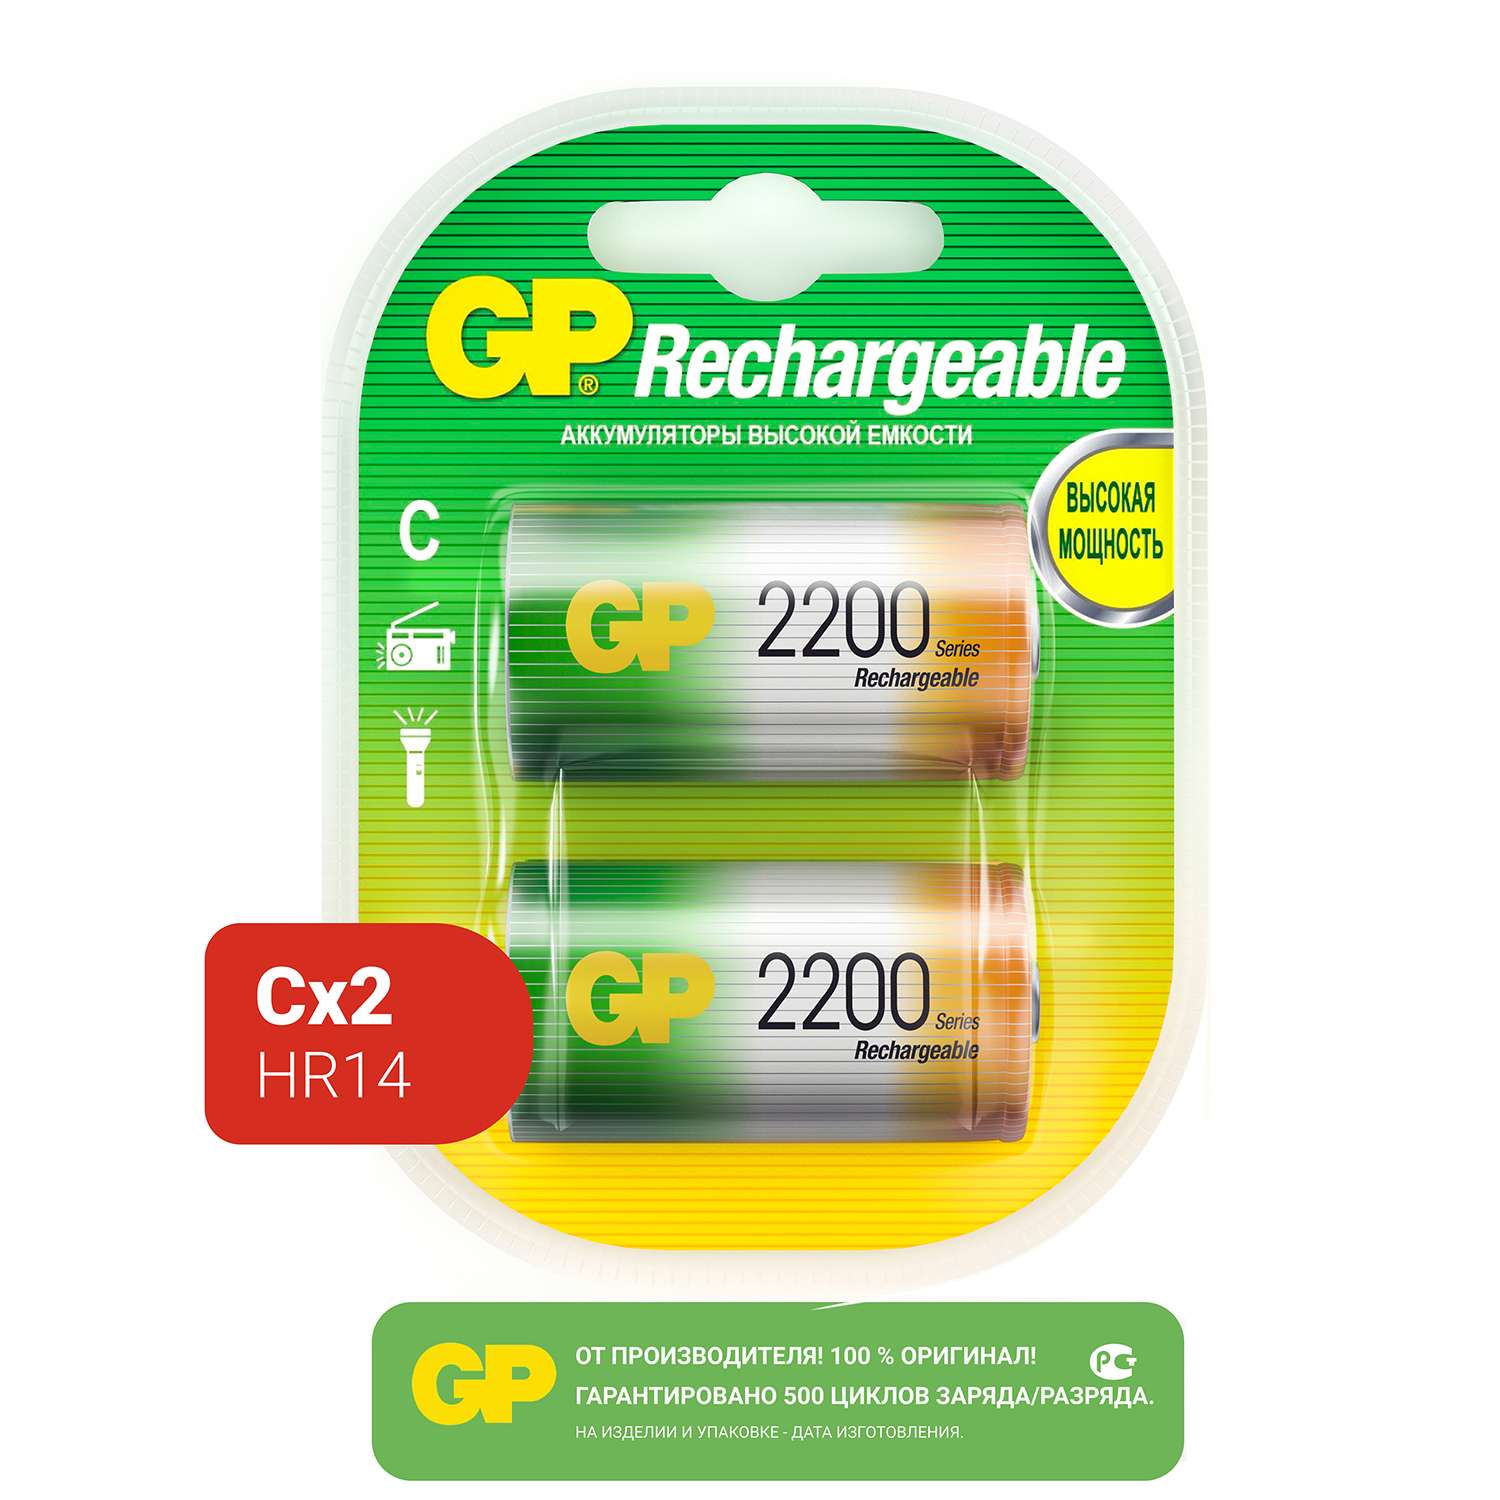 Аккумулятор GP C HR14 2200mAh 2шт GP 220CH-2CR2 - фото 2